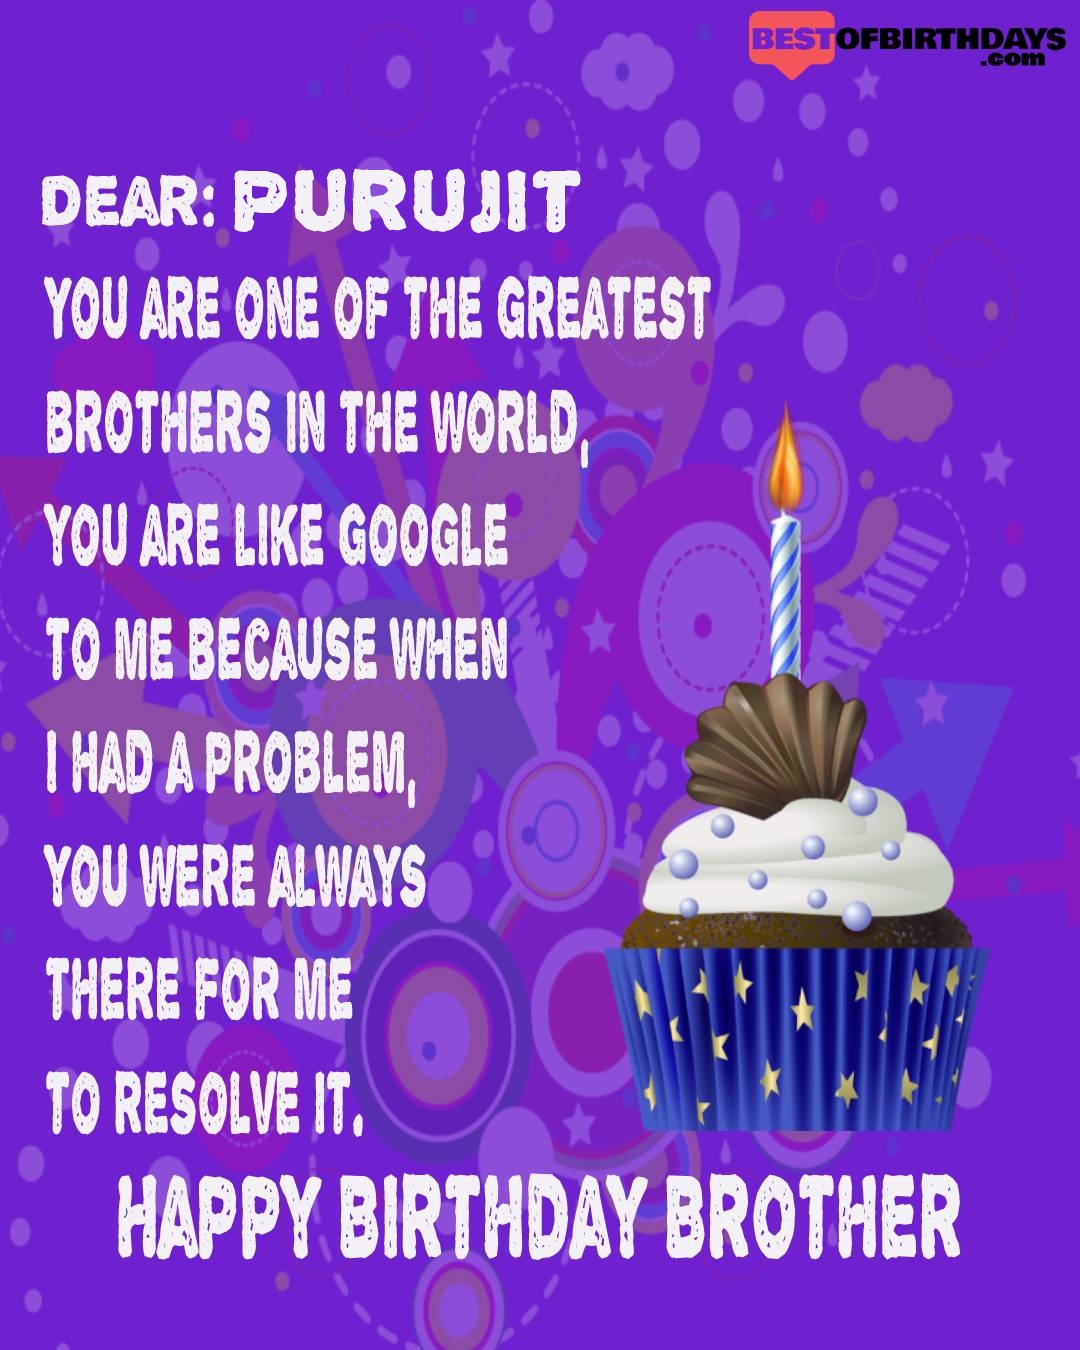 Happy birthday purujit bhai brother bro